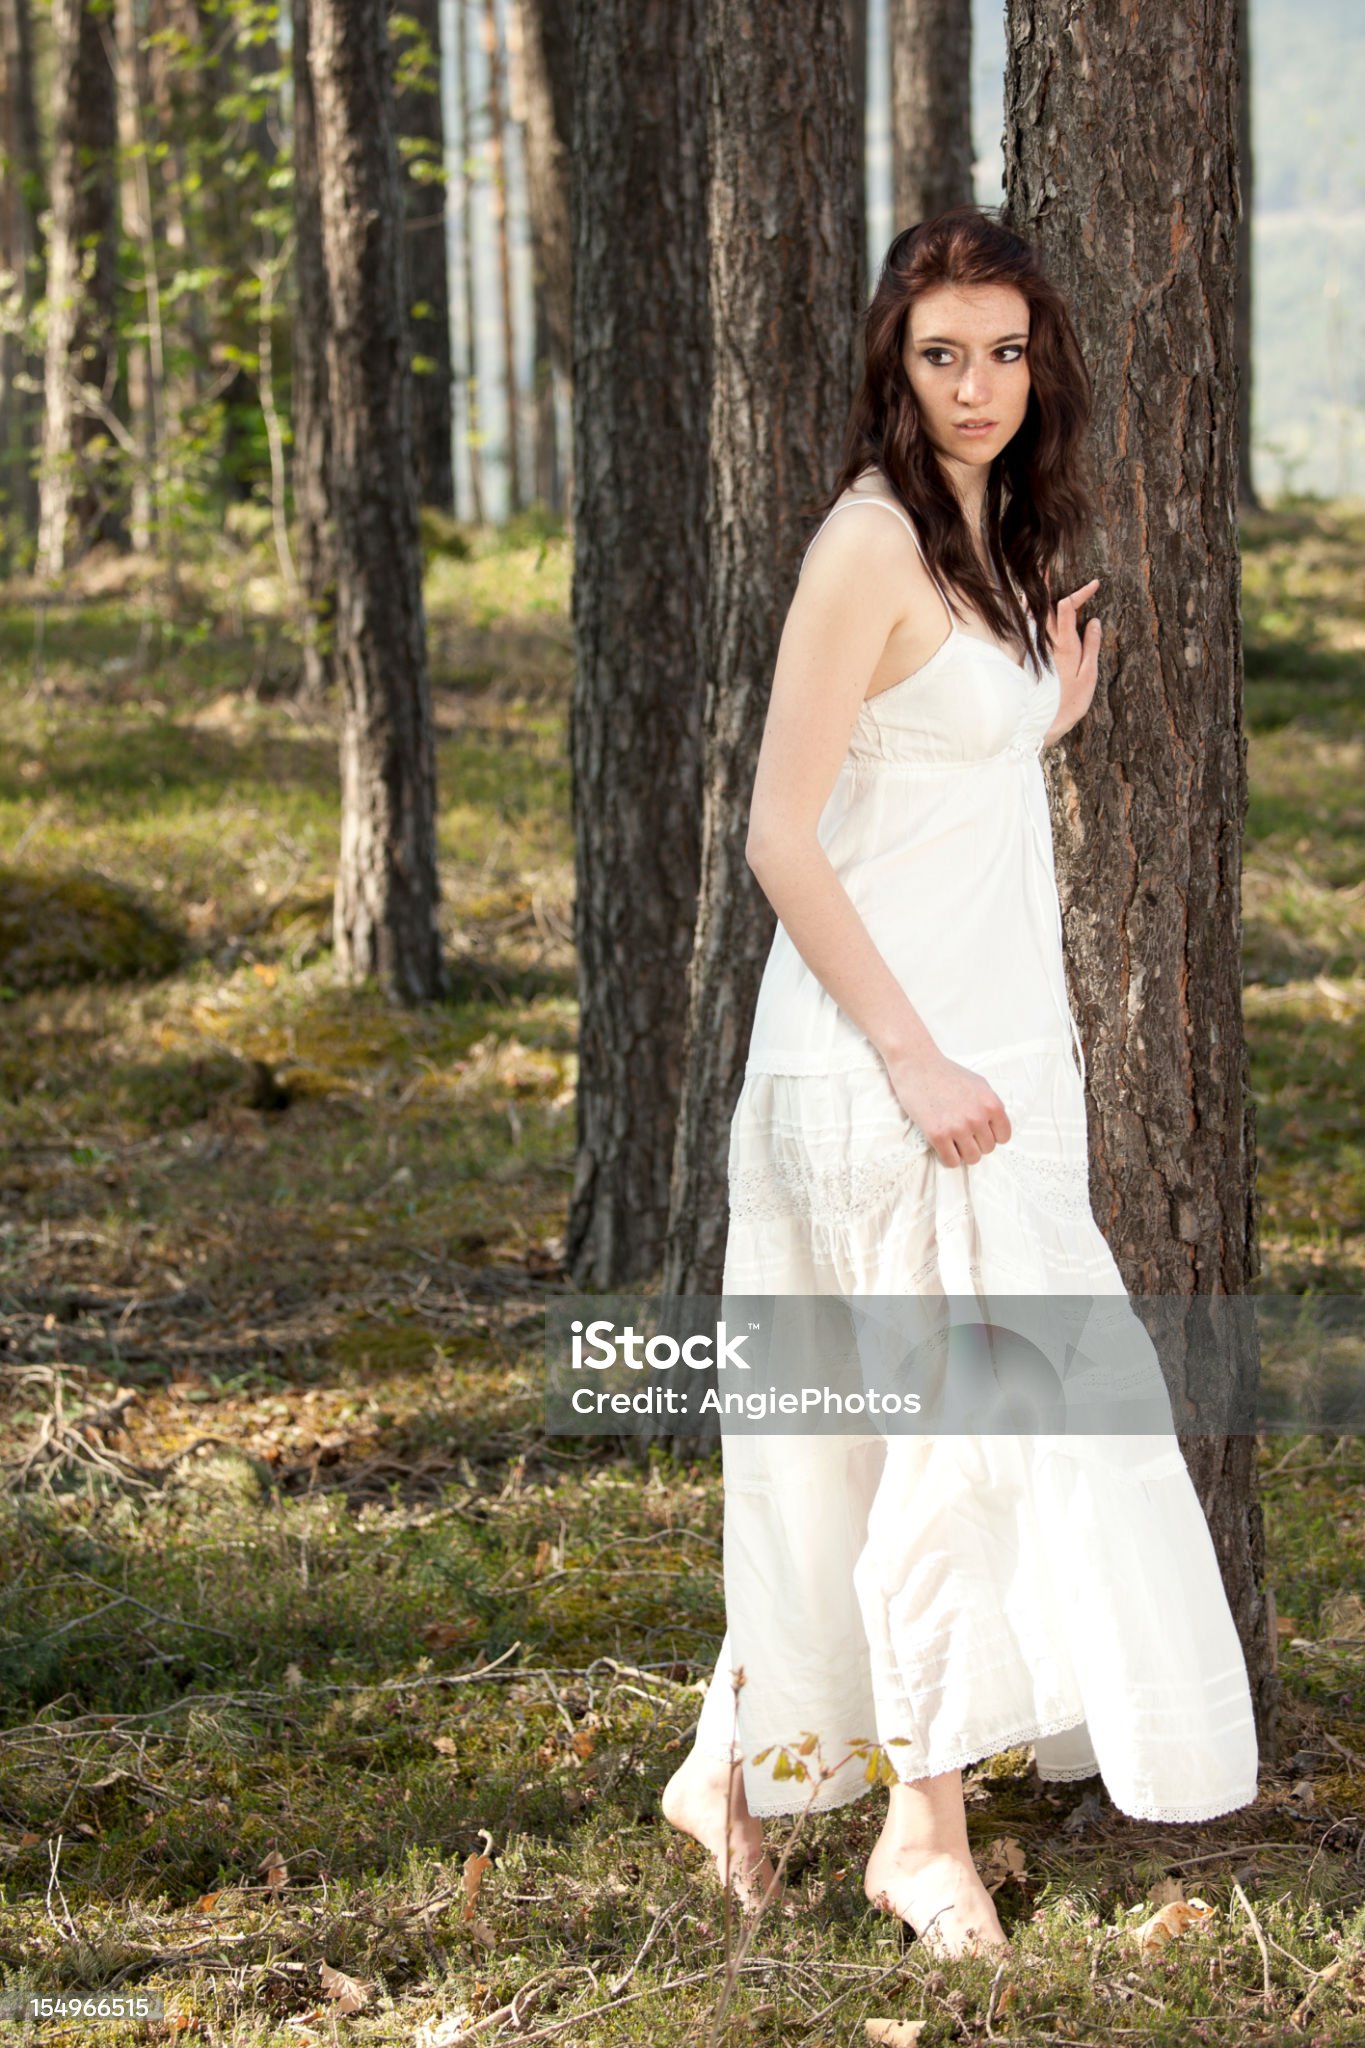 https://media.istockphoto.com/id/154966515/photo/young-woman-in-the-forest.jpg?s=2048x2048&amp;w=is&amp;k=20&amp;c=QlMDkMYdHNCl_DKmgvQwnXW_wY4tLnwamdwg-WUI4FU=